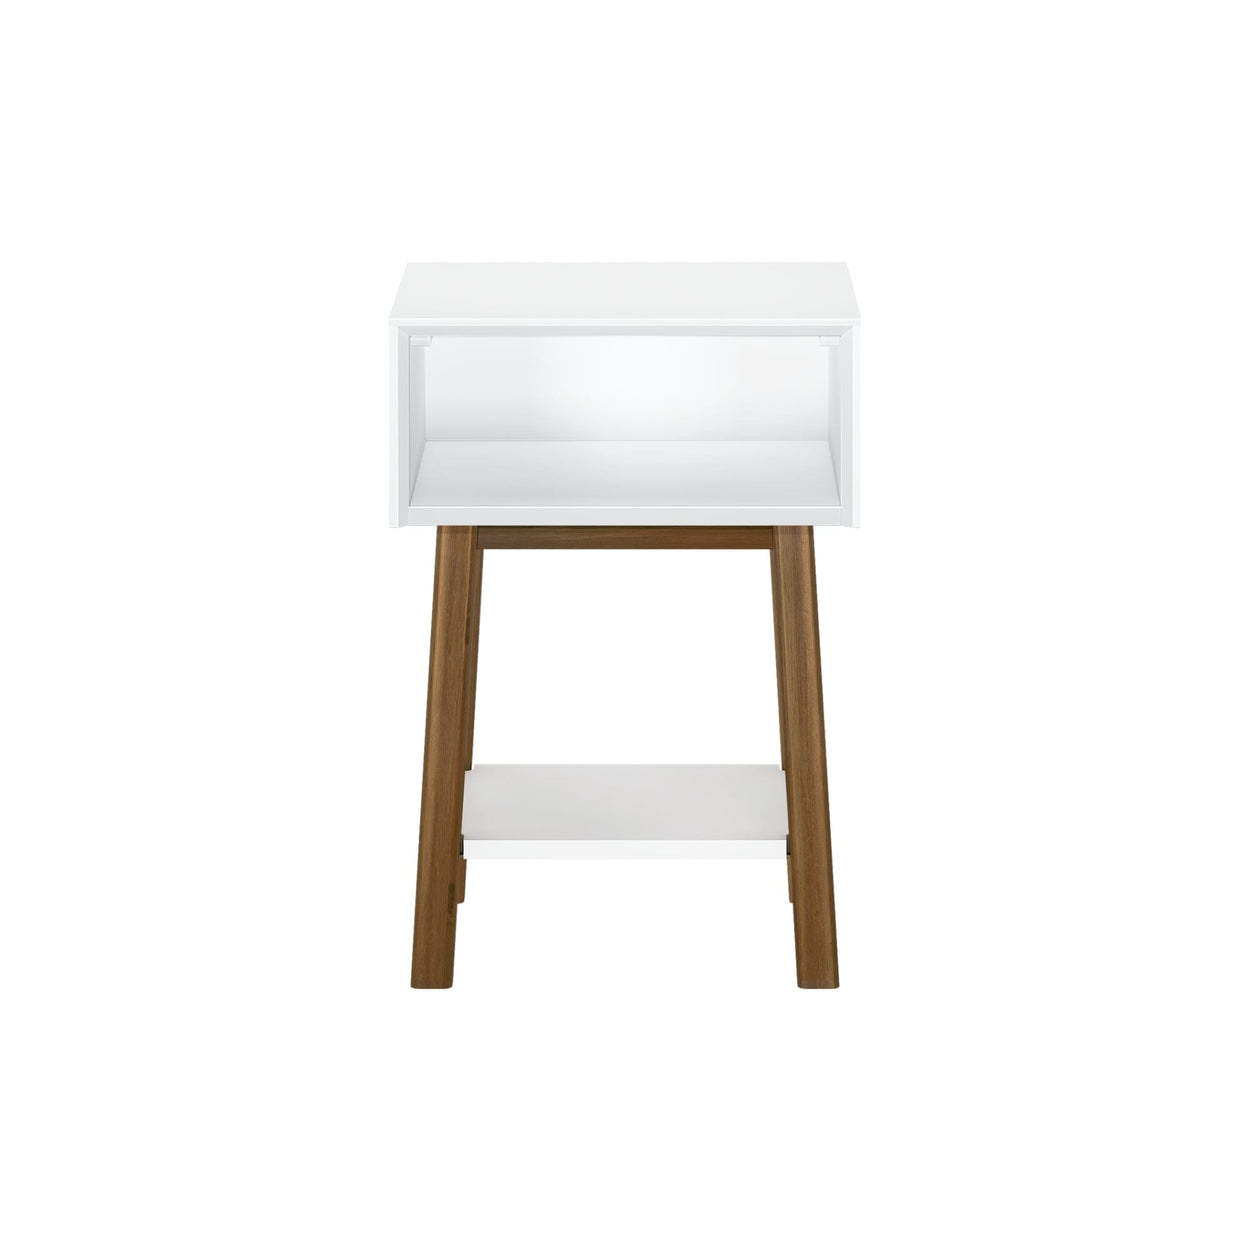 200010-207 : Furniture Mid-Century Modern Cubby Nightstand, White/Pecan